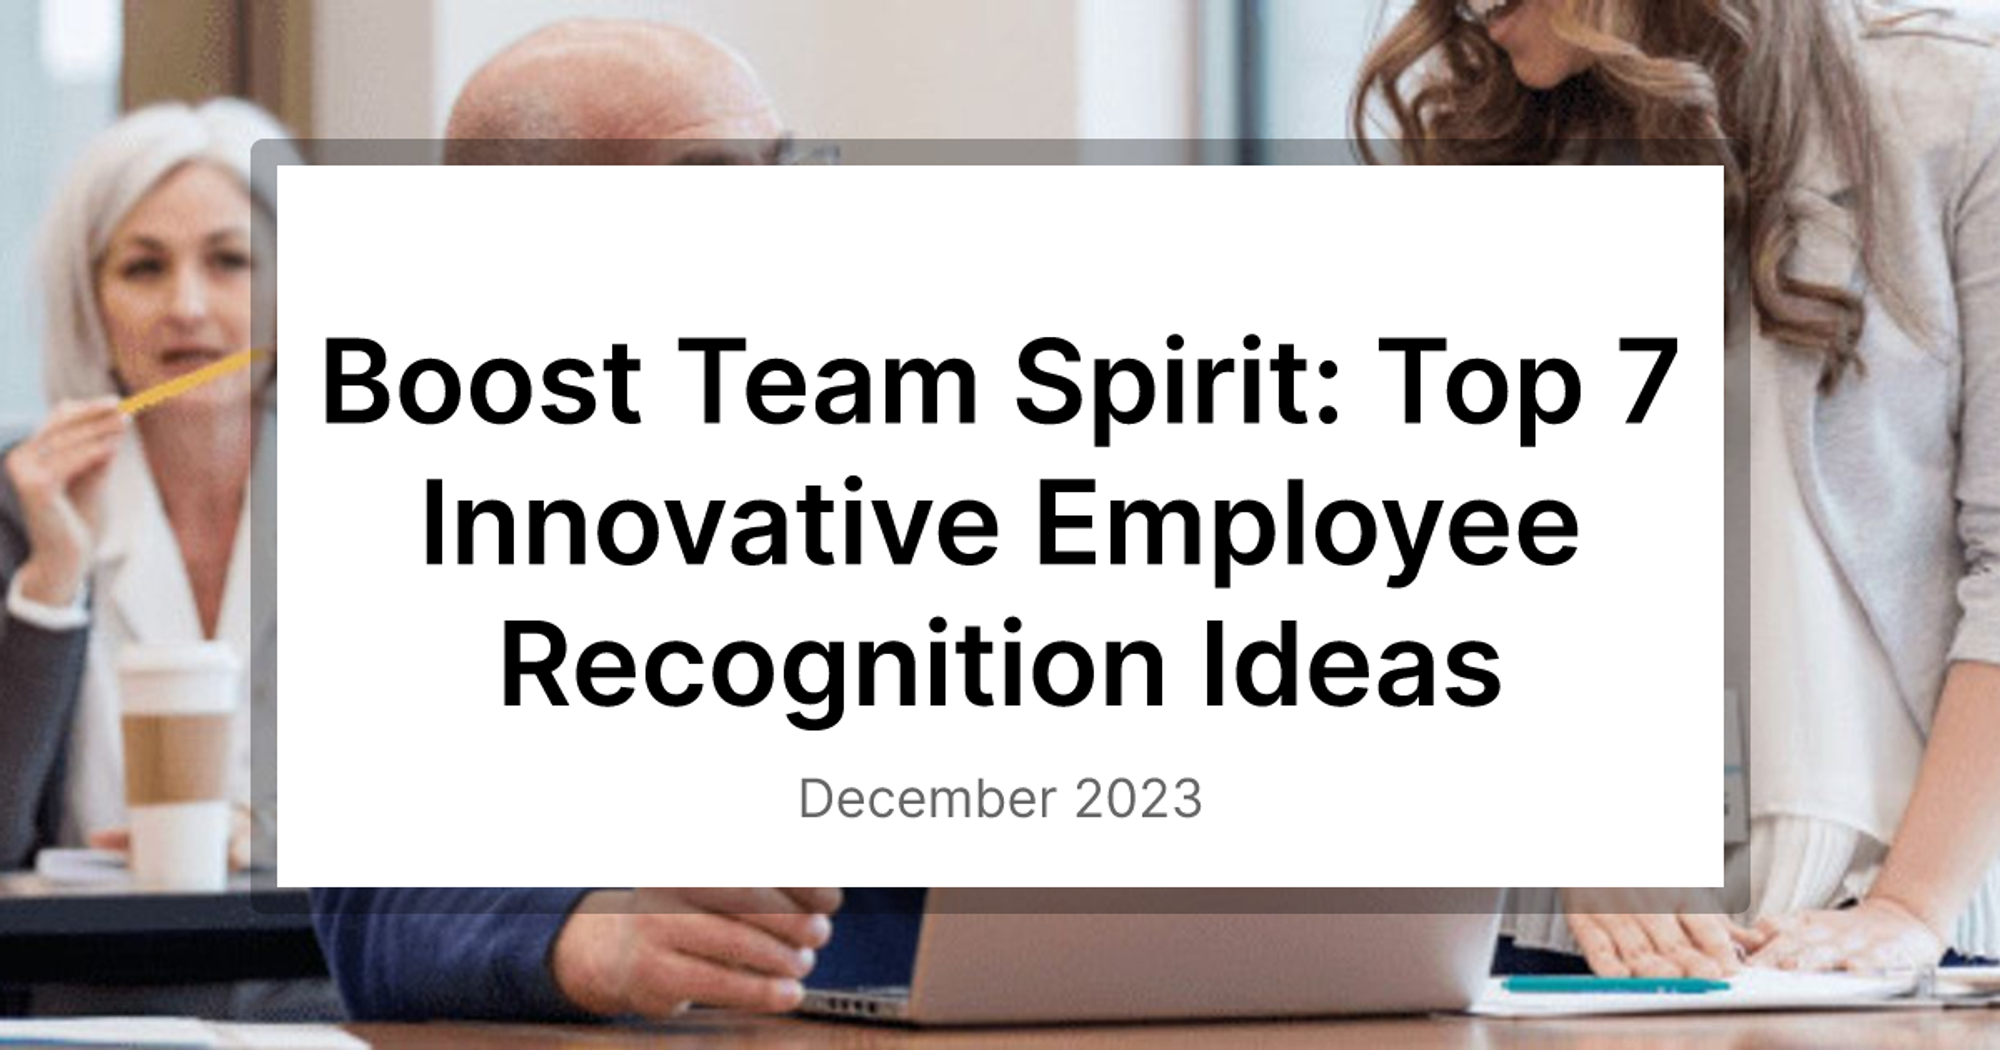 Boost Team Spirit: Top 7 Innovative Employee Recognition Ideas